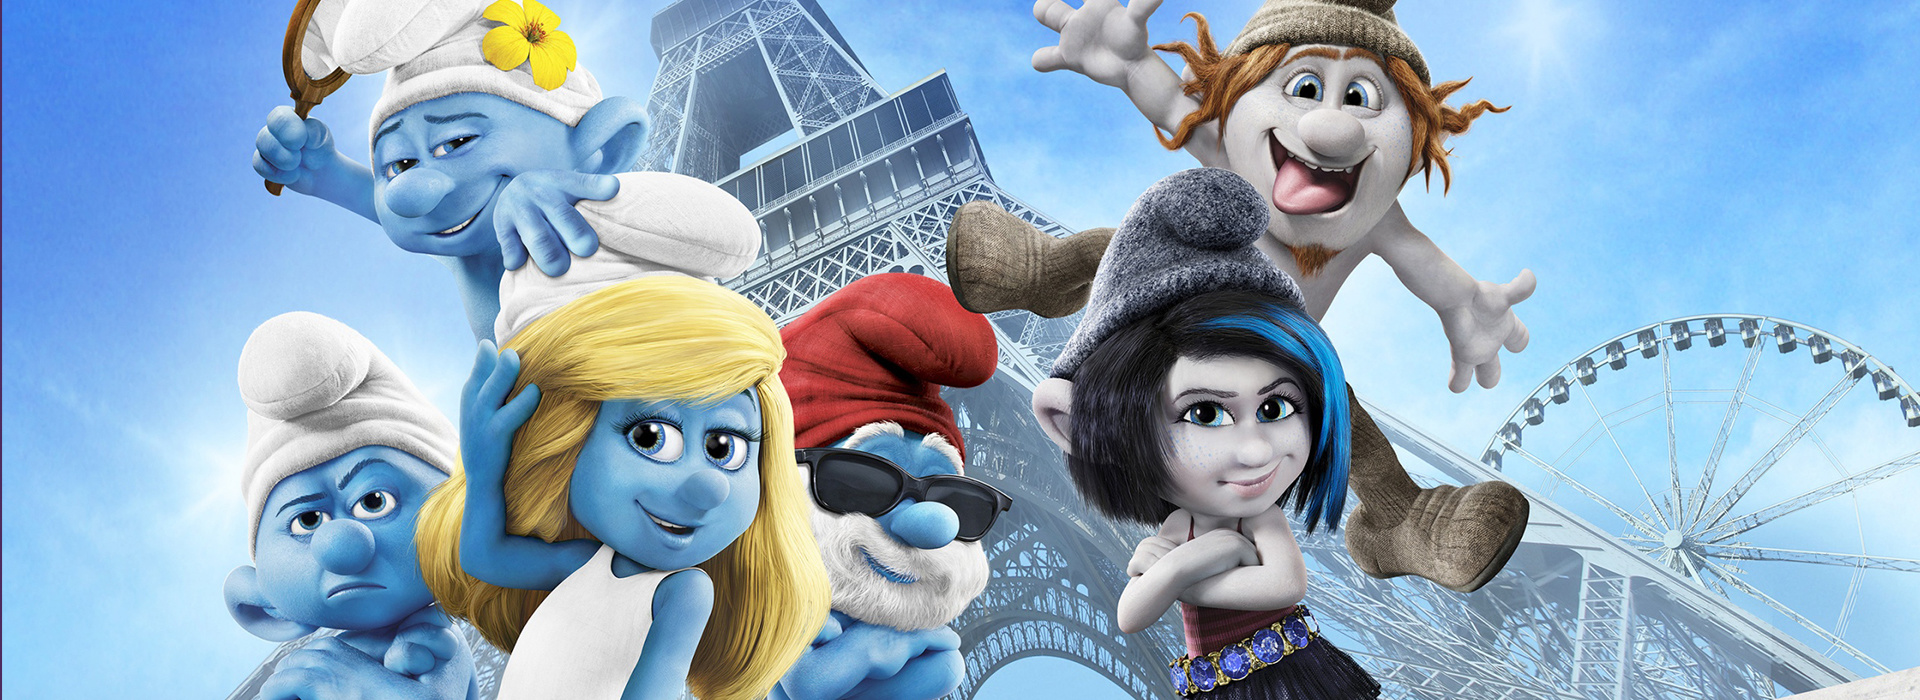 Movie poster The Smurfs 2